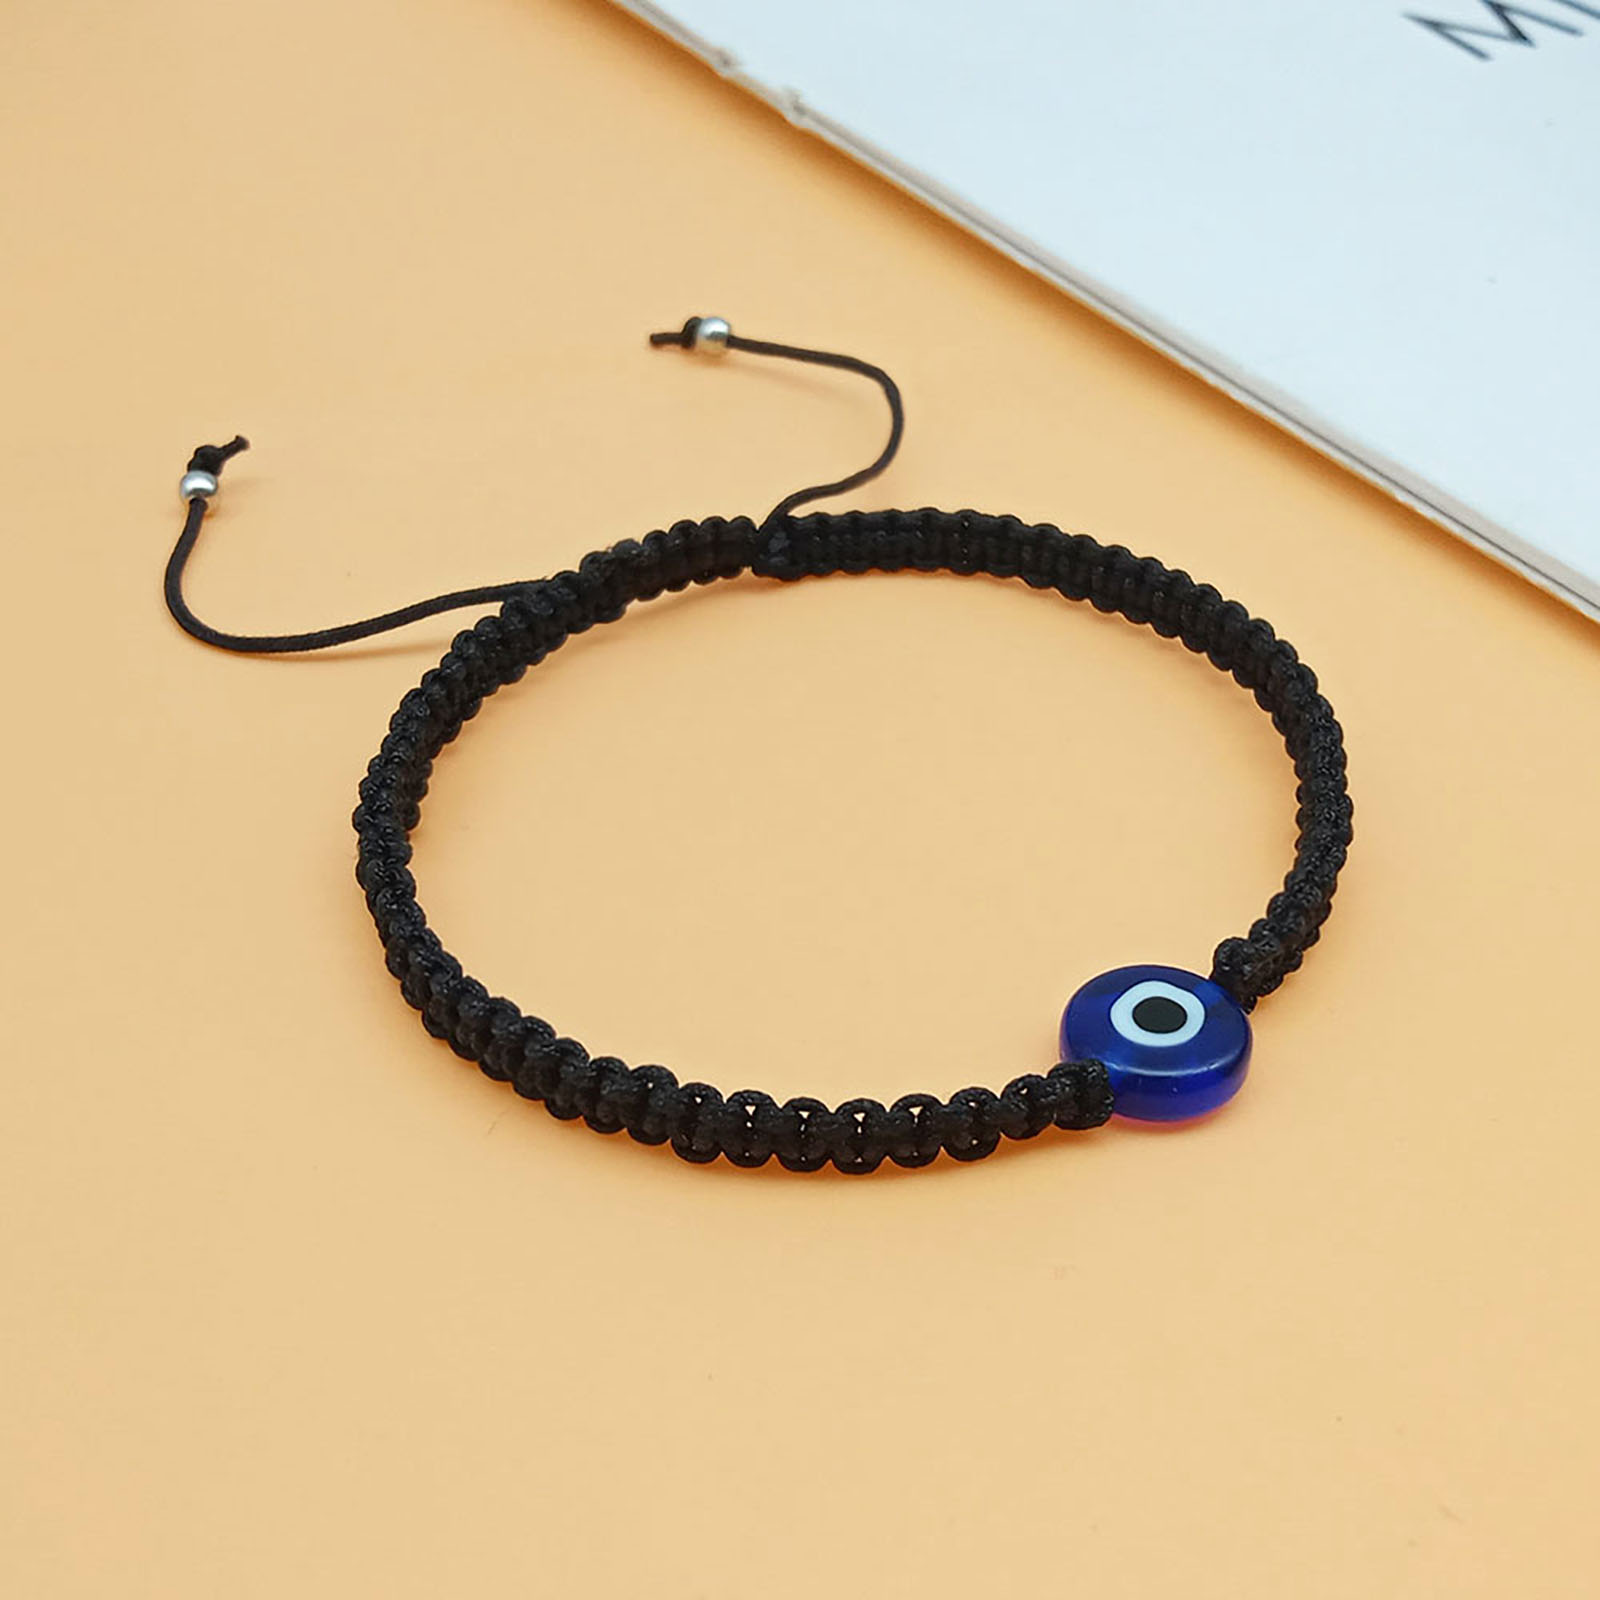 1:Blue Eyed Black Rope Bracelet